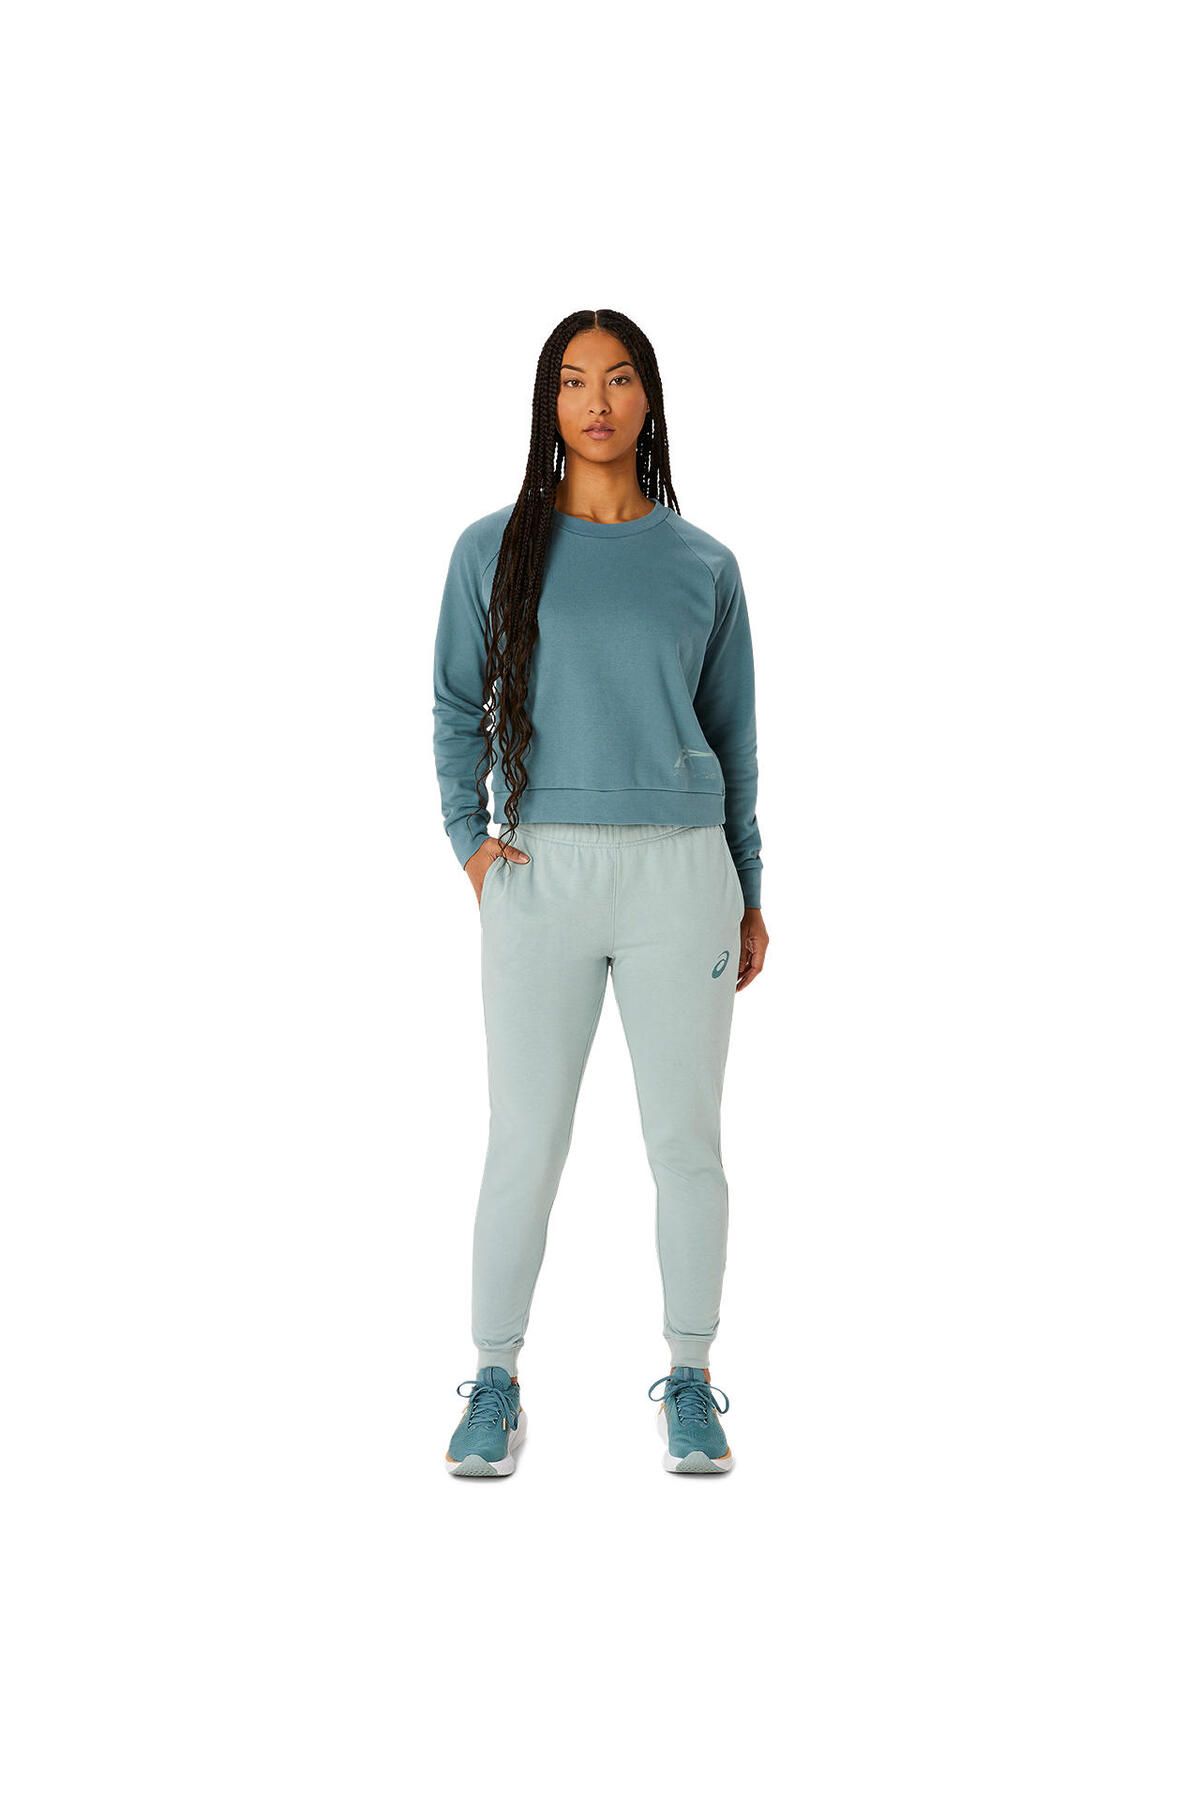 Asics Tiger Sweatshirt Kadın Mavi Sweatshirt 2032c511-400